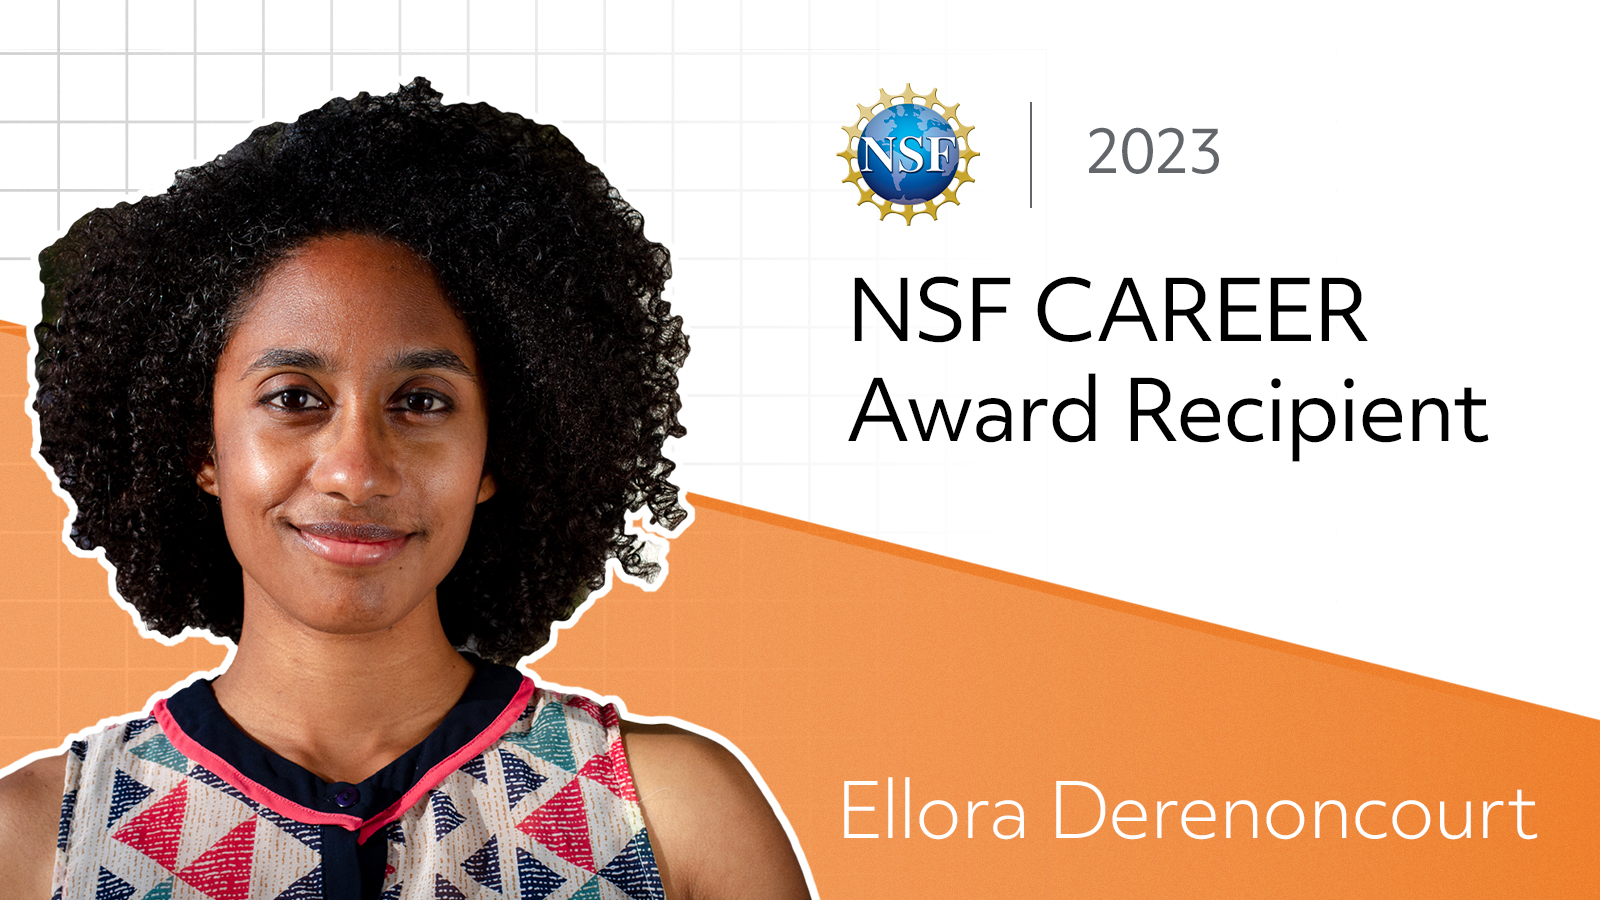 Ellora Derenoncourt awarded NSF CAREER Award to study U.S. racial